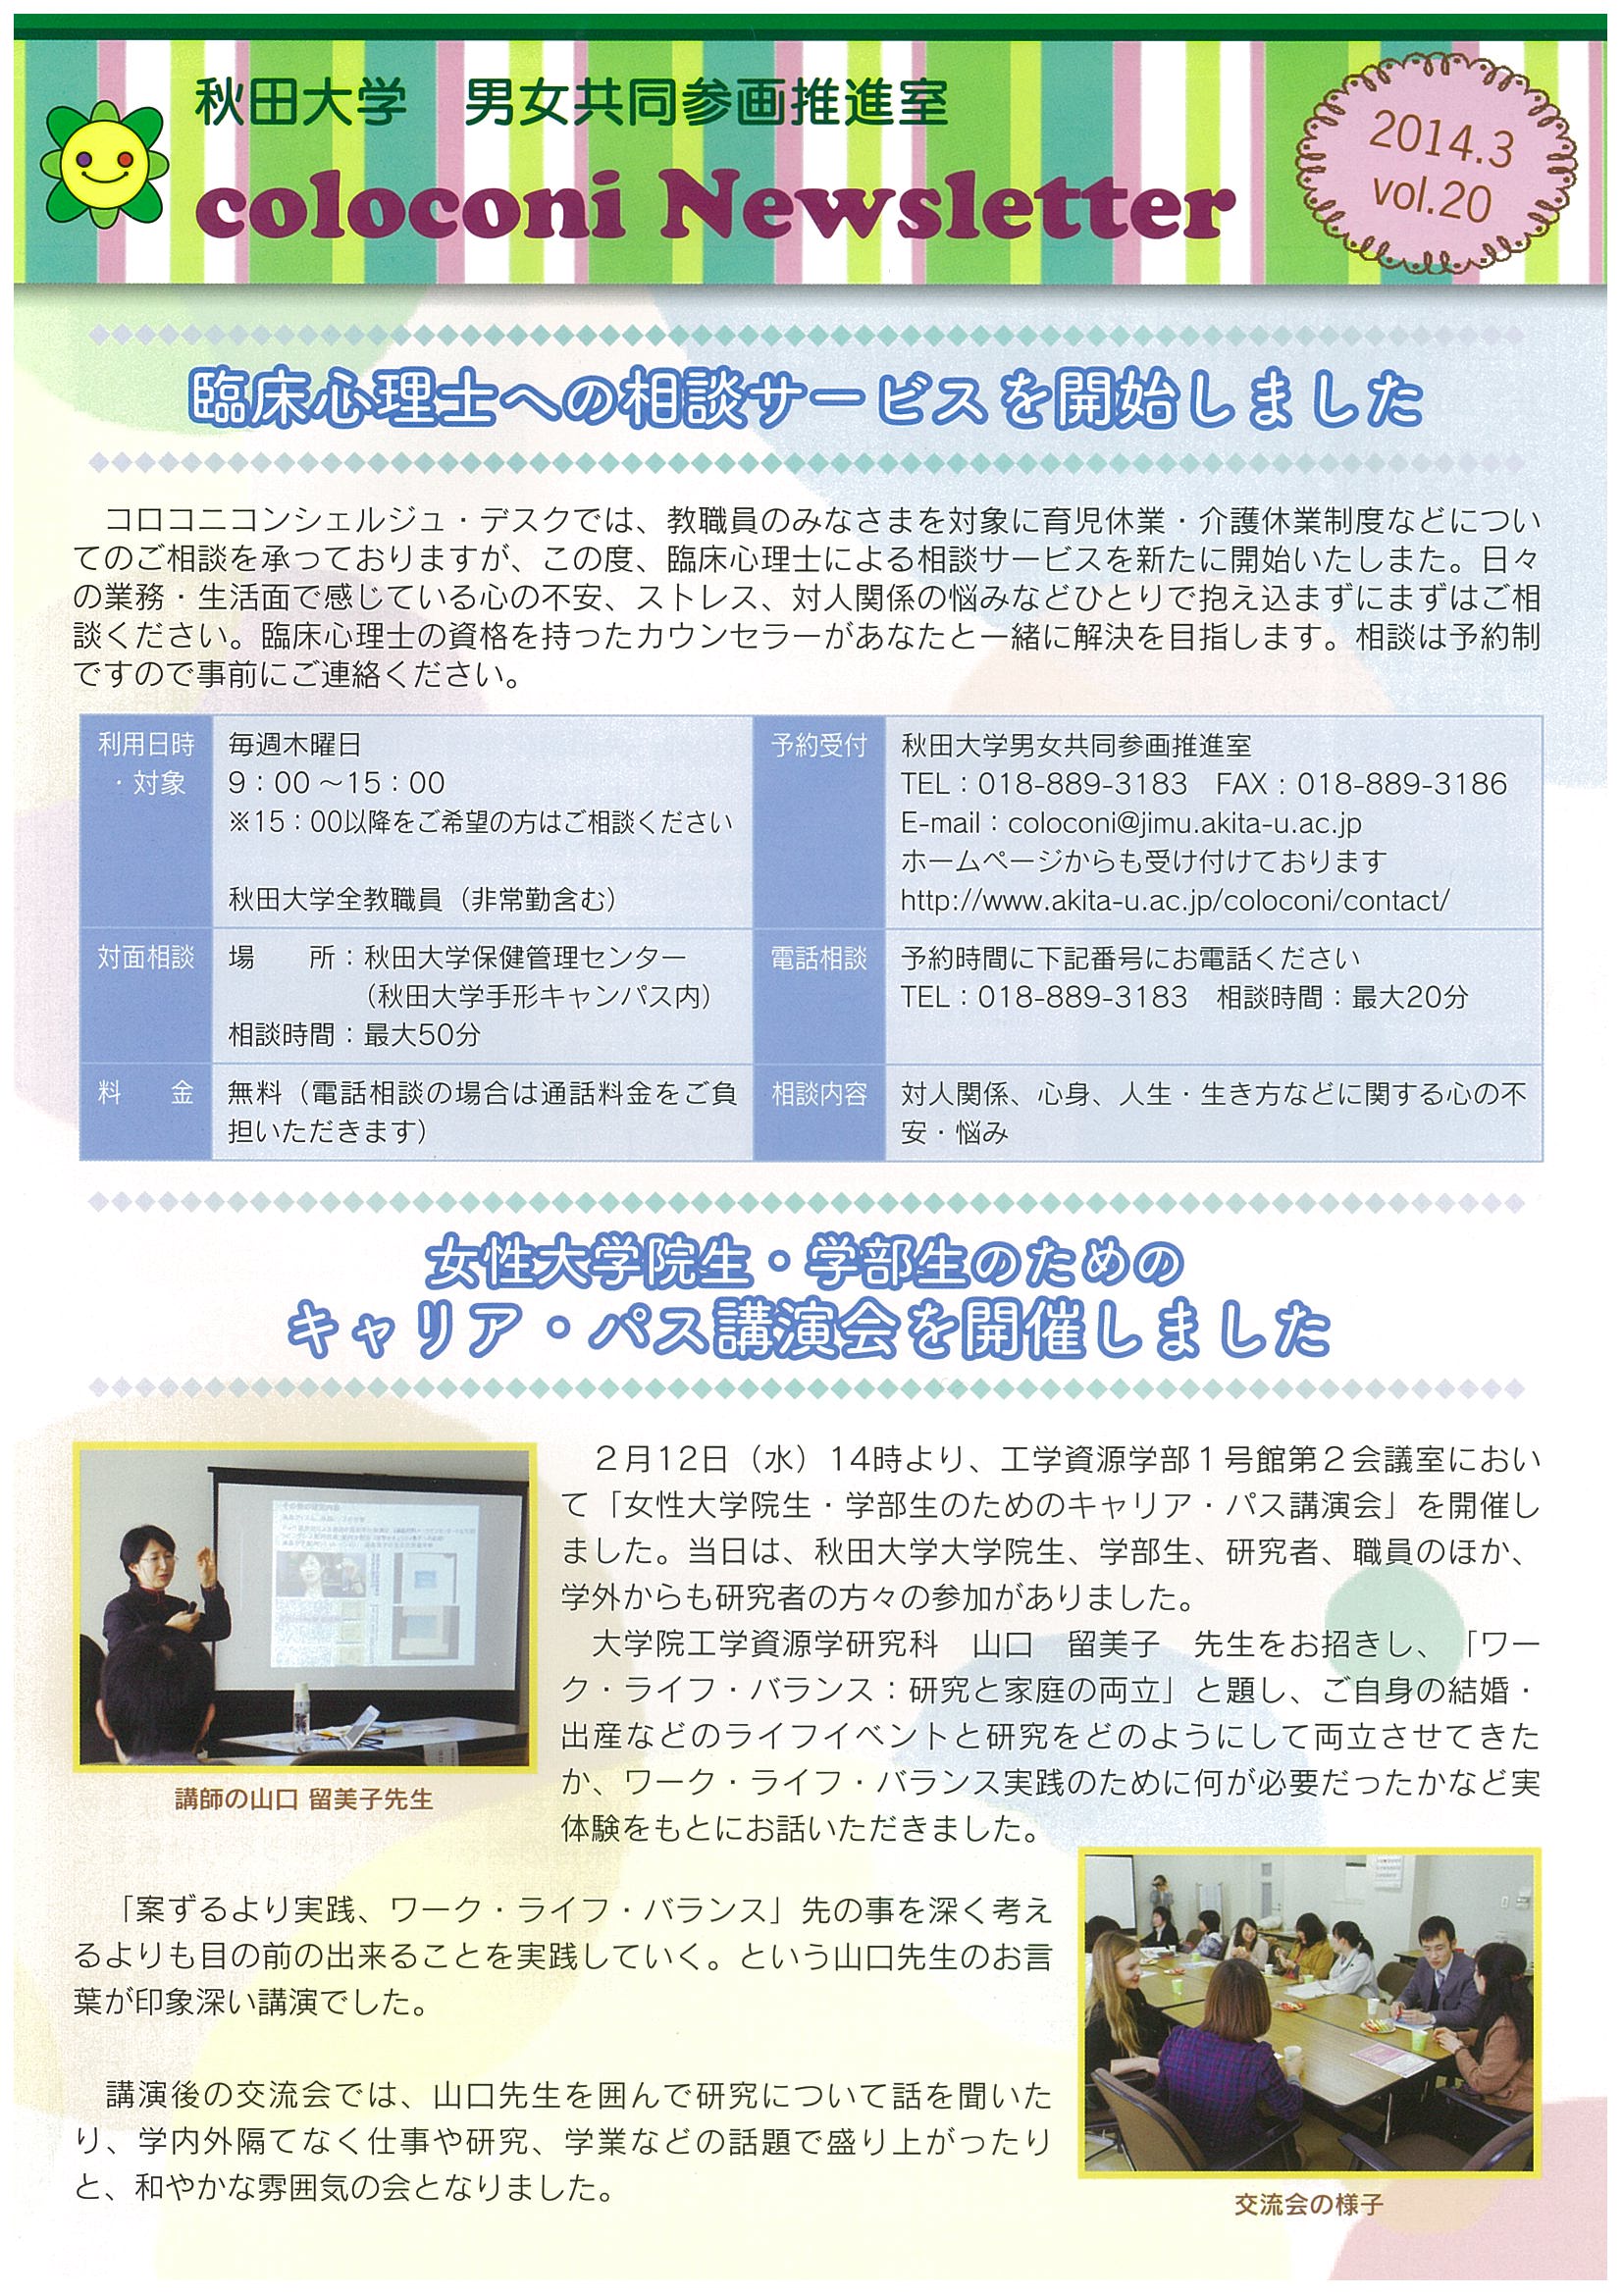 Newsletter　【vol.20 (2014.3)】 